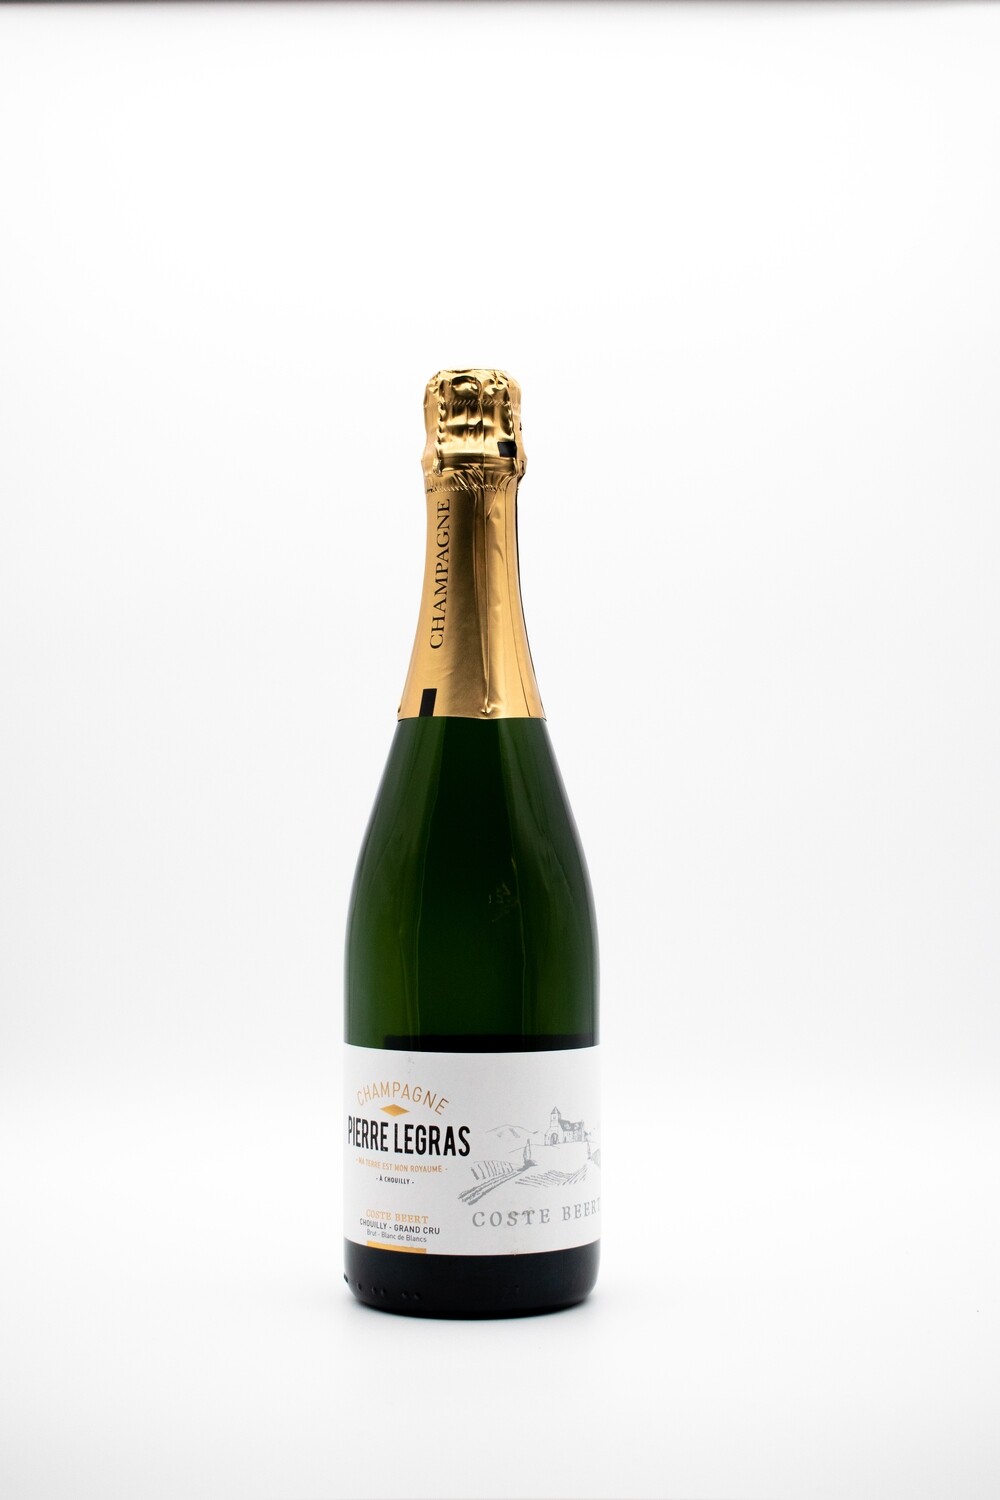 Pierre Legras - Champagne Brut Blanc de Blancs Chouilly Grand Cru AOC Coste Beert